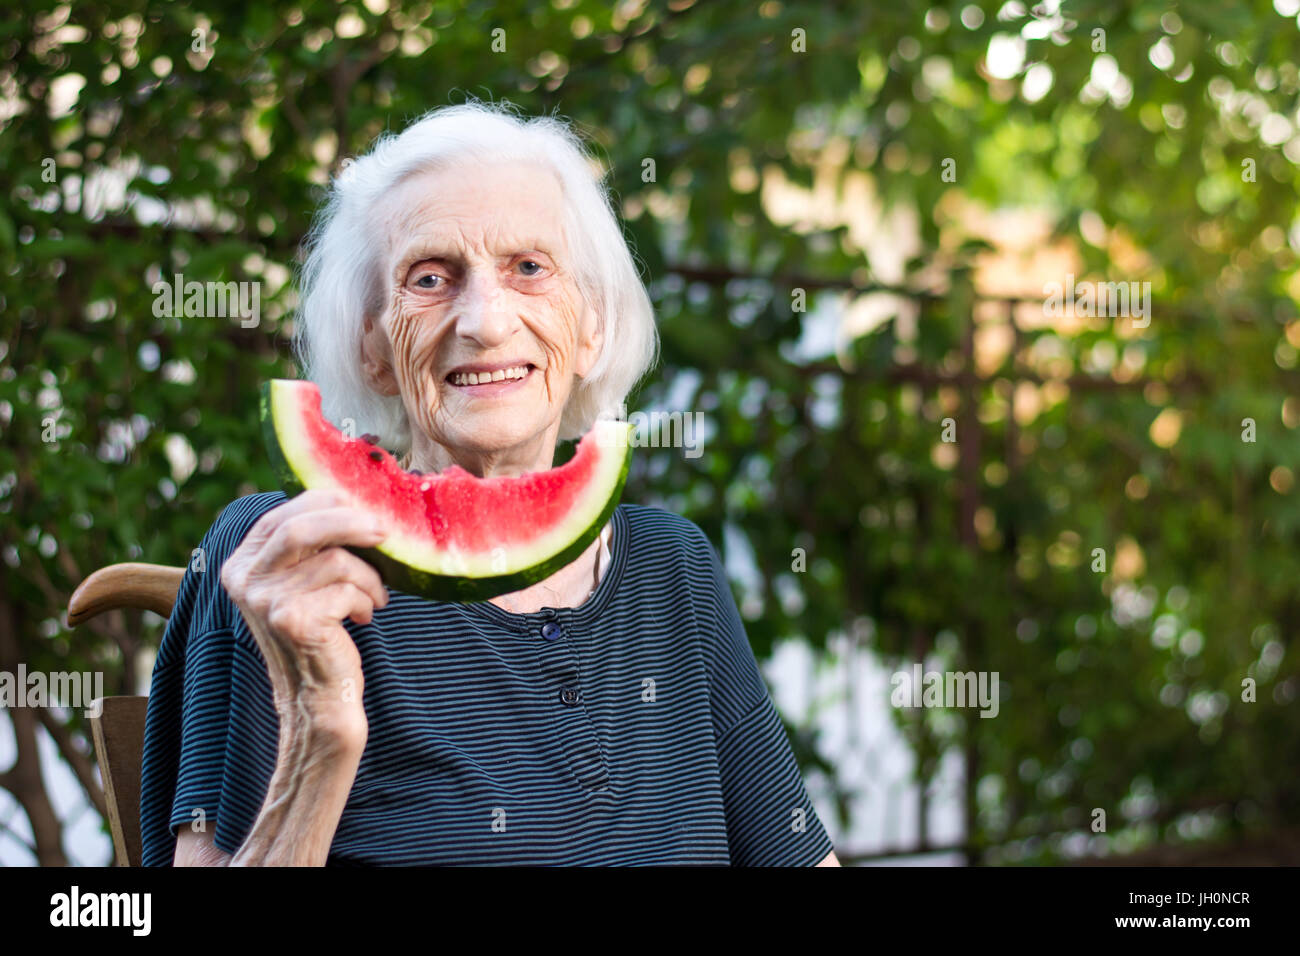 Cheerful senior woman holding watermelon slice in the backyard Stock Photo